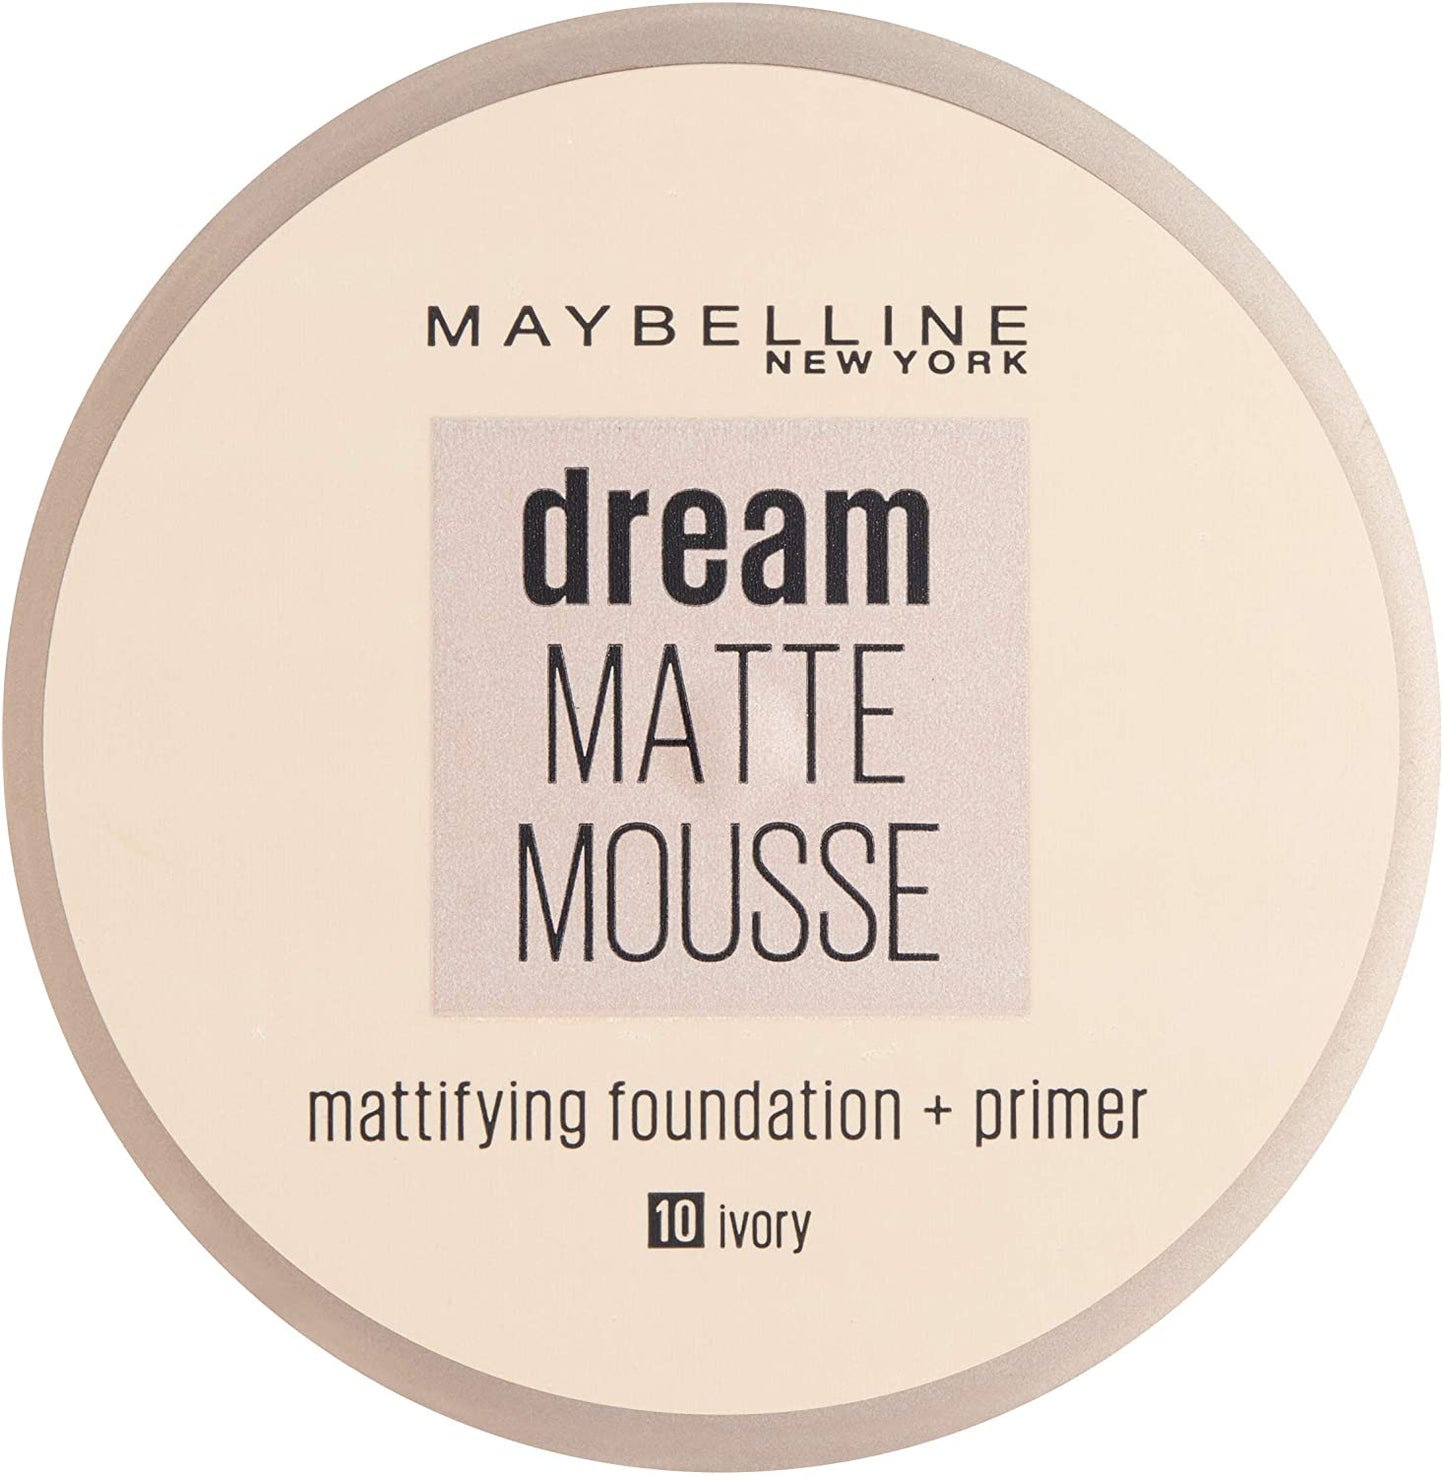 Maybelline New York Dream Matte Mousse Foundation, Natural Beige, 0.5 Fl Oz (Pack of 1)